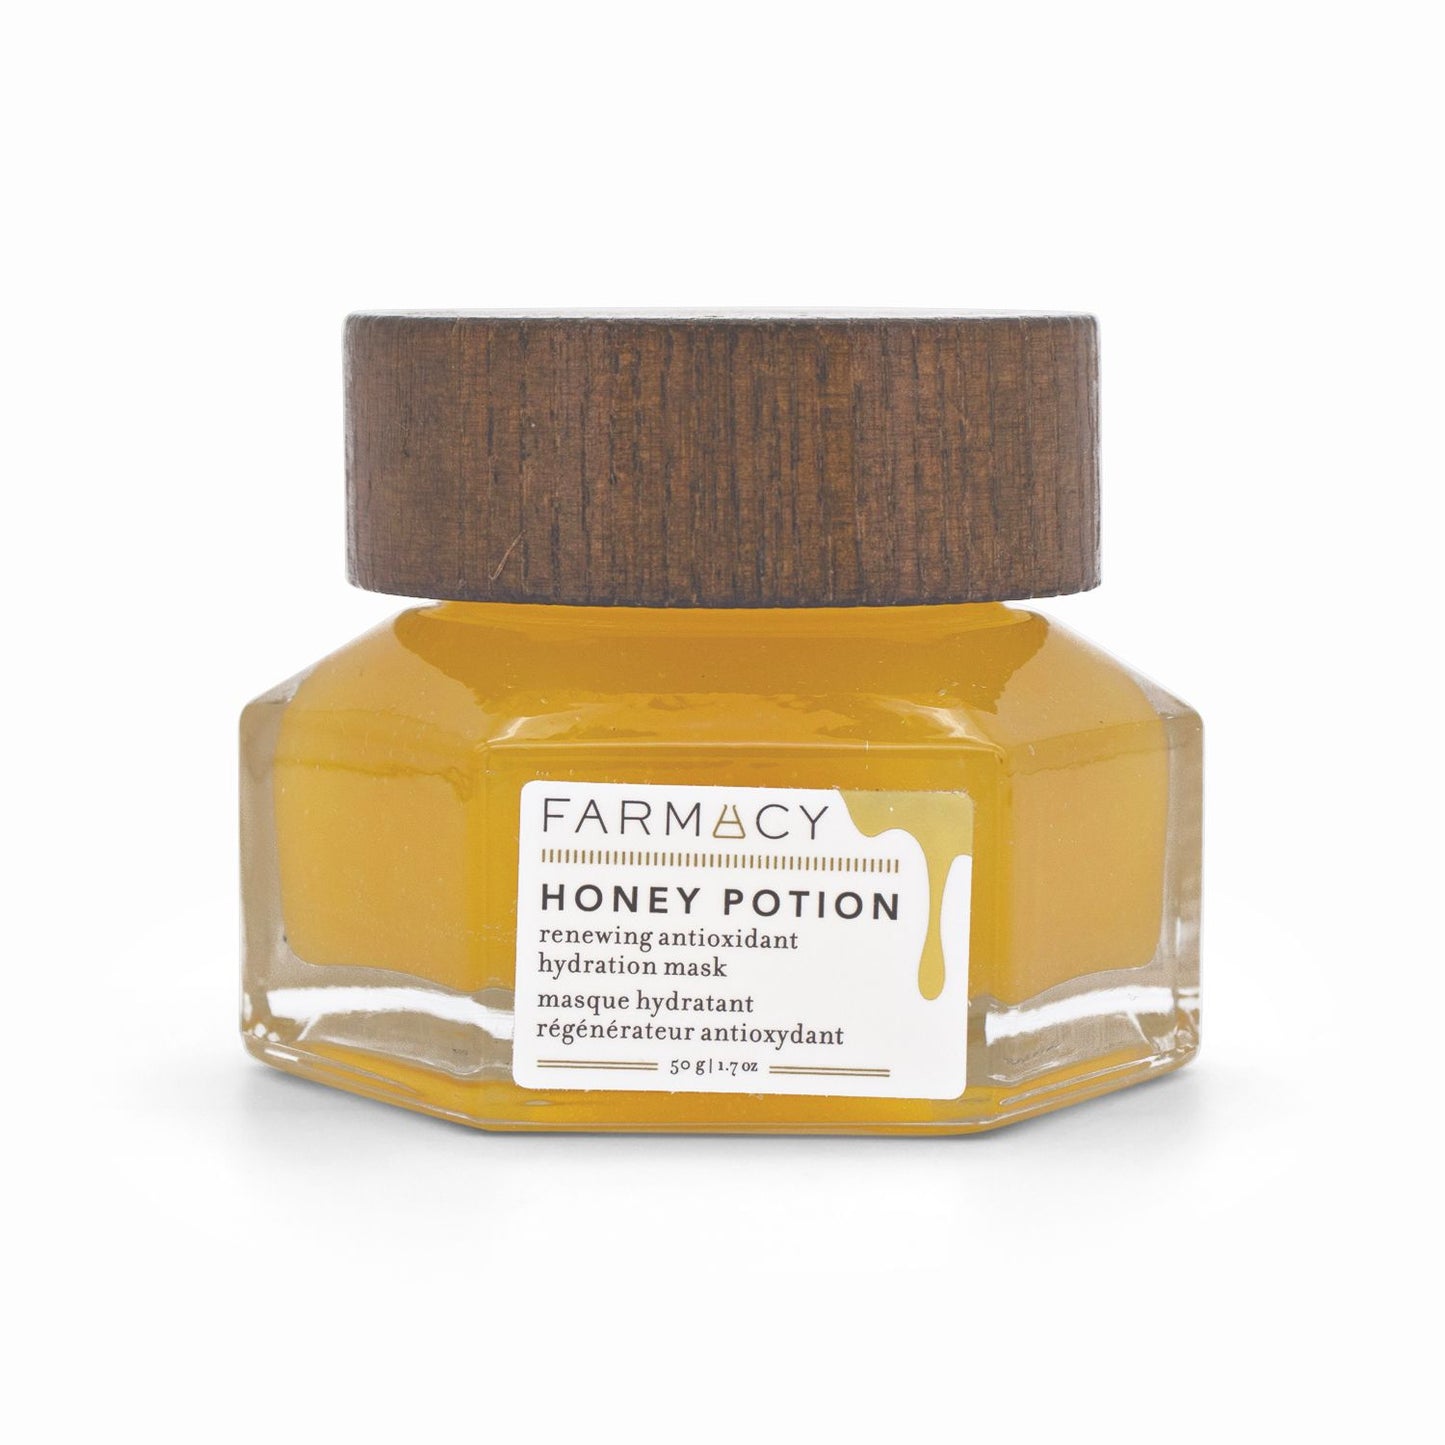 FARMACY Honey Potion Renewing Antioxidant Hydration Mask 50g - Imperfect Box